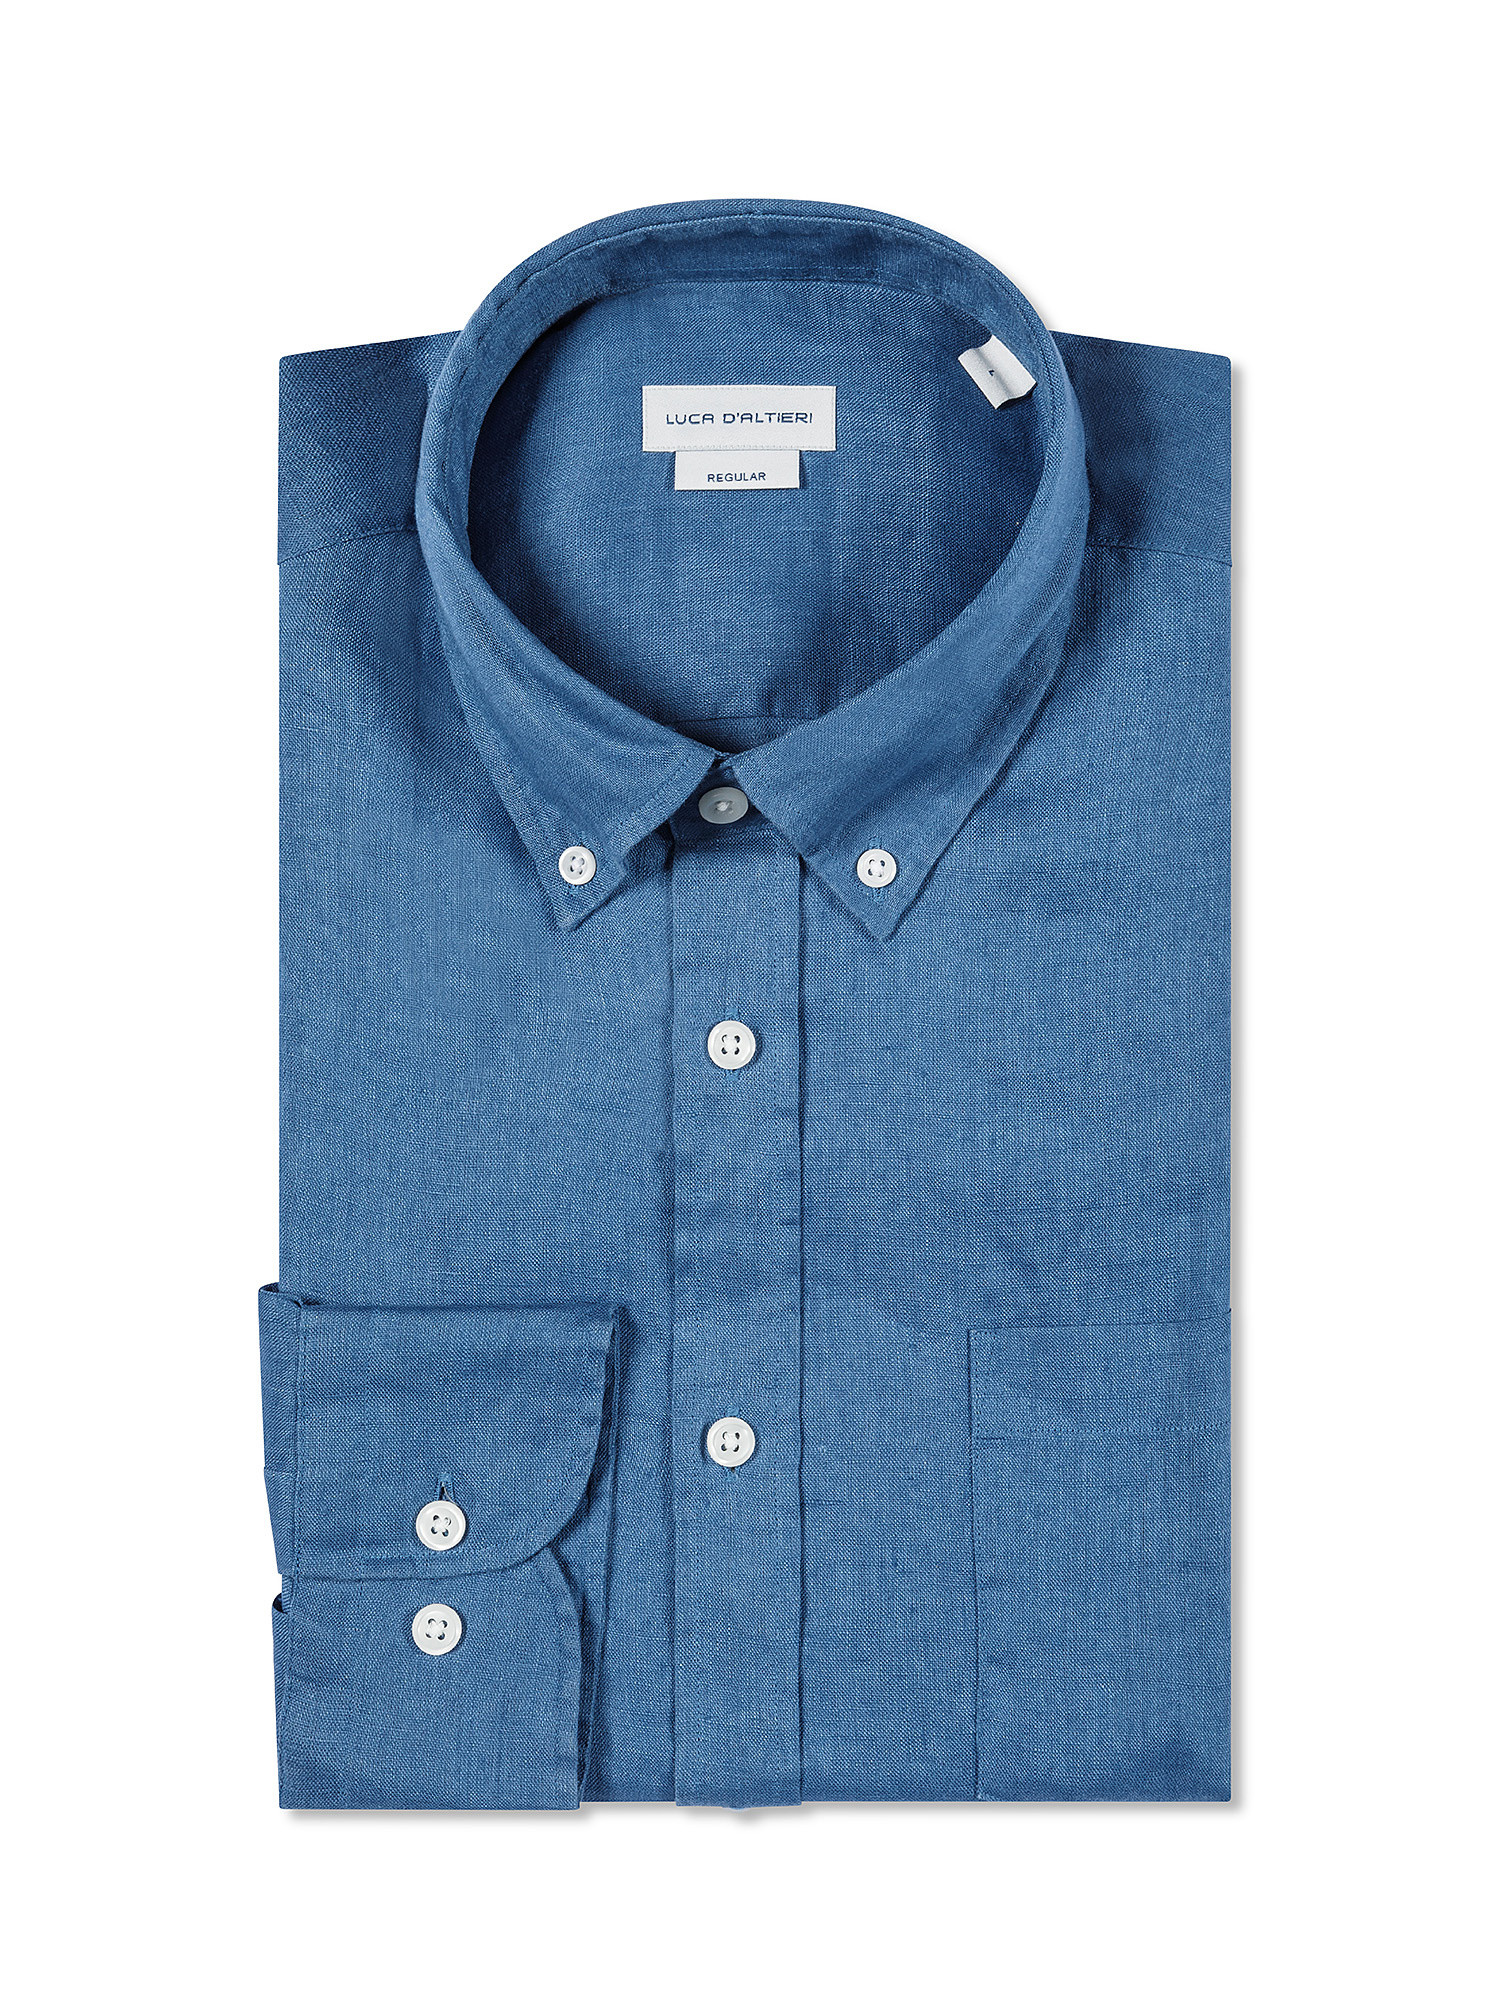 Luca D'Altieri - Regular fit shirt in pure linen, Denim, large image number 2